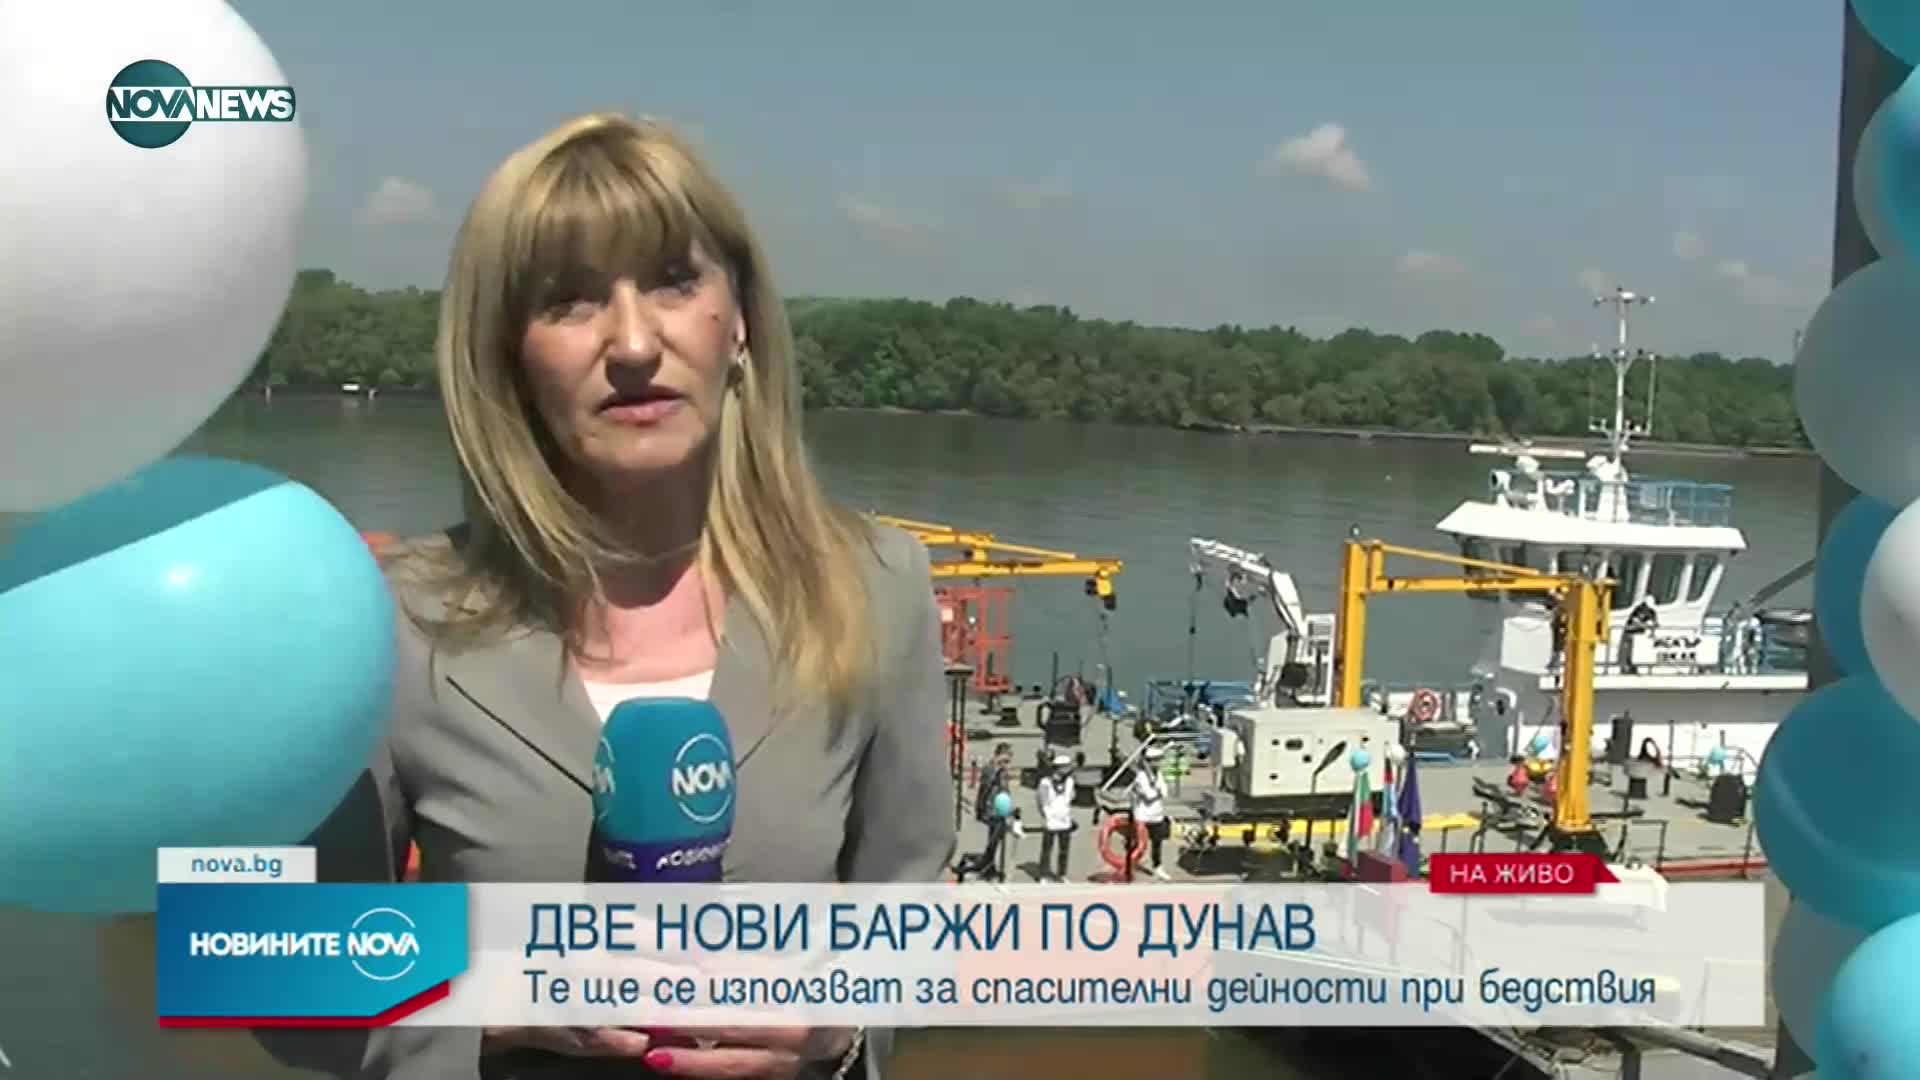 Две нови баржи за спасителни дейности пускат по Дунав